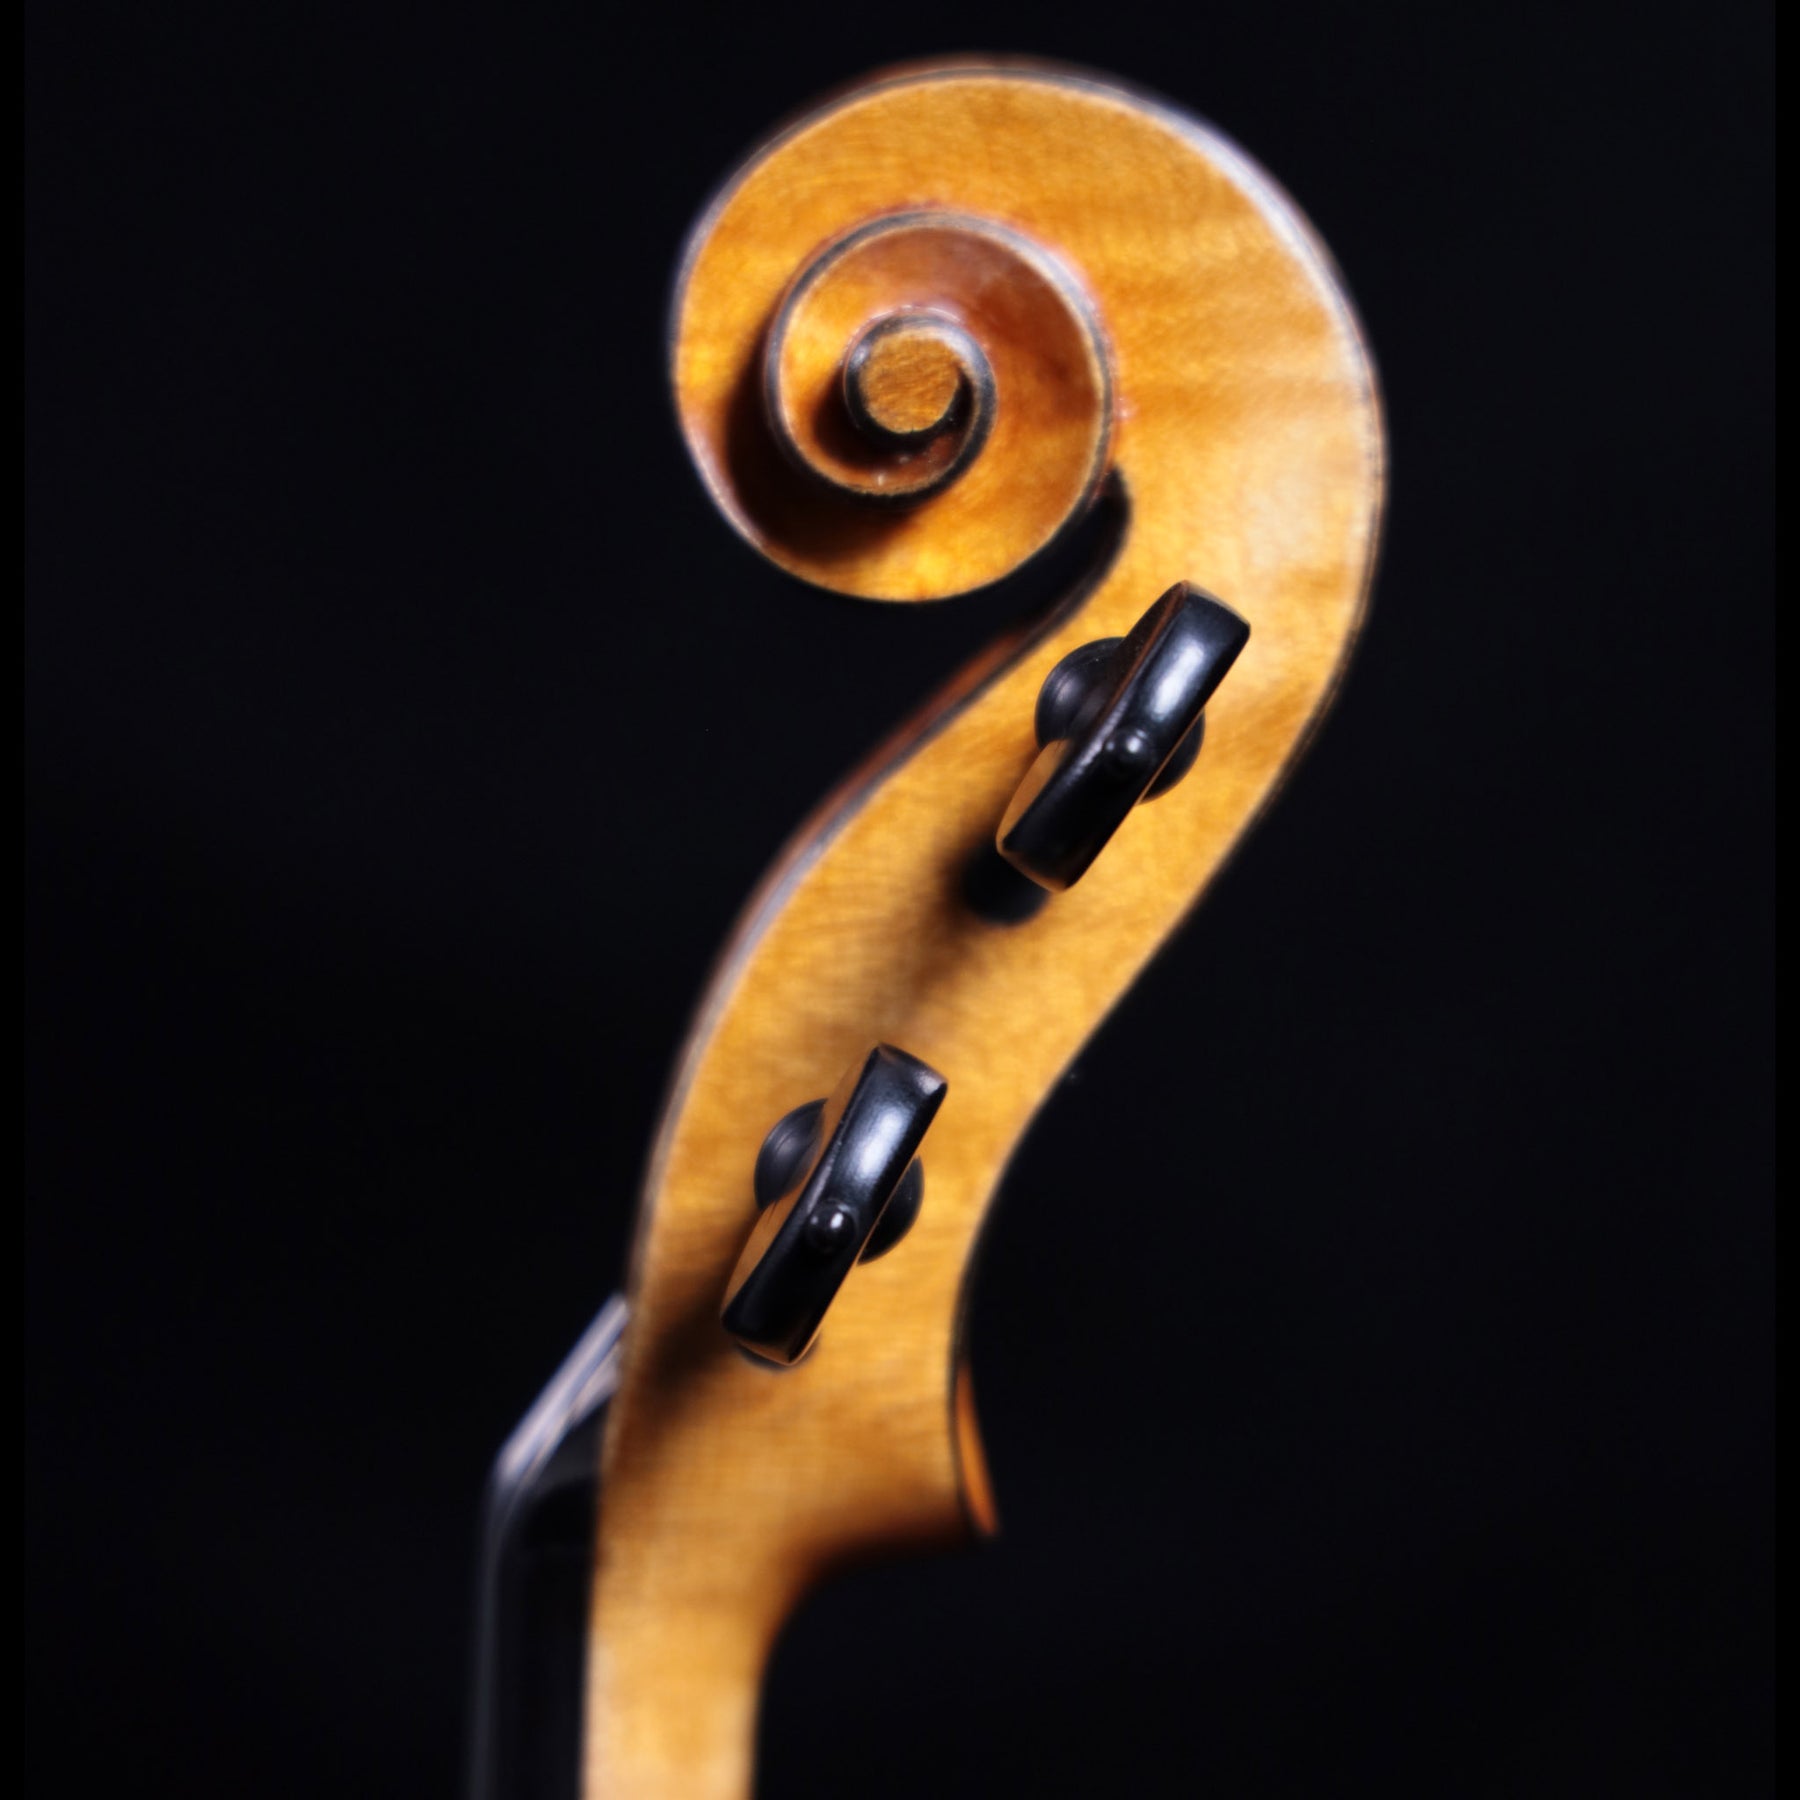 Francesco Pierotti, Cesena Italy, Violin 2020